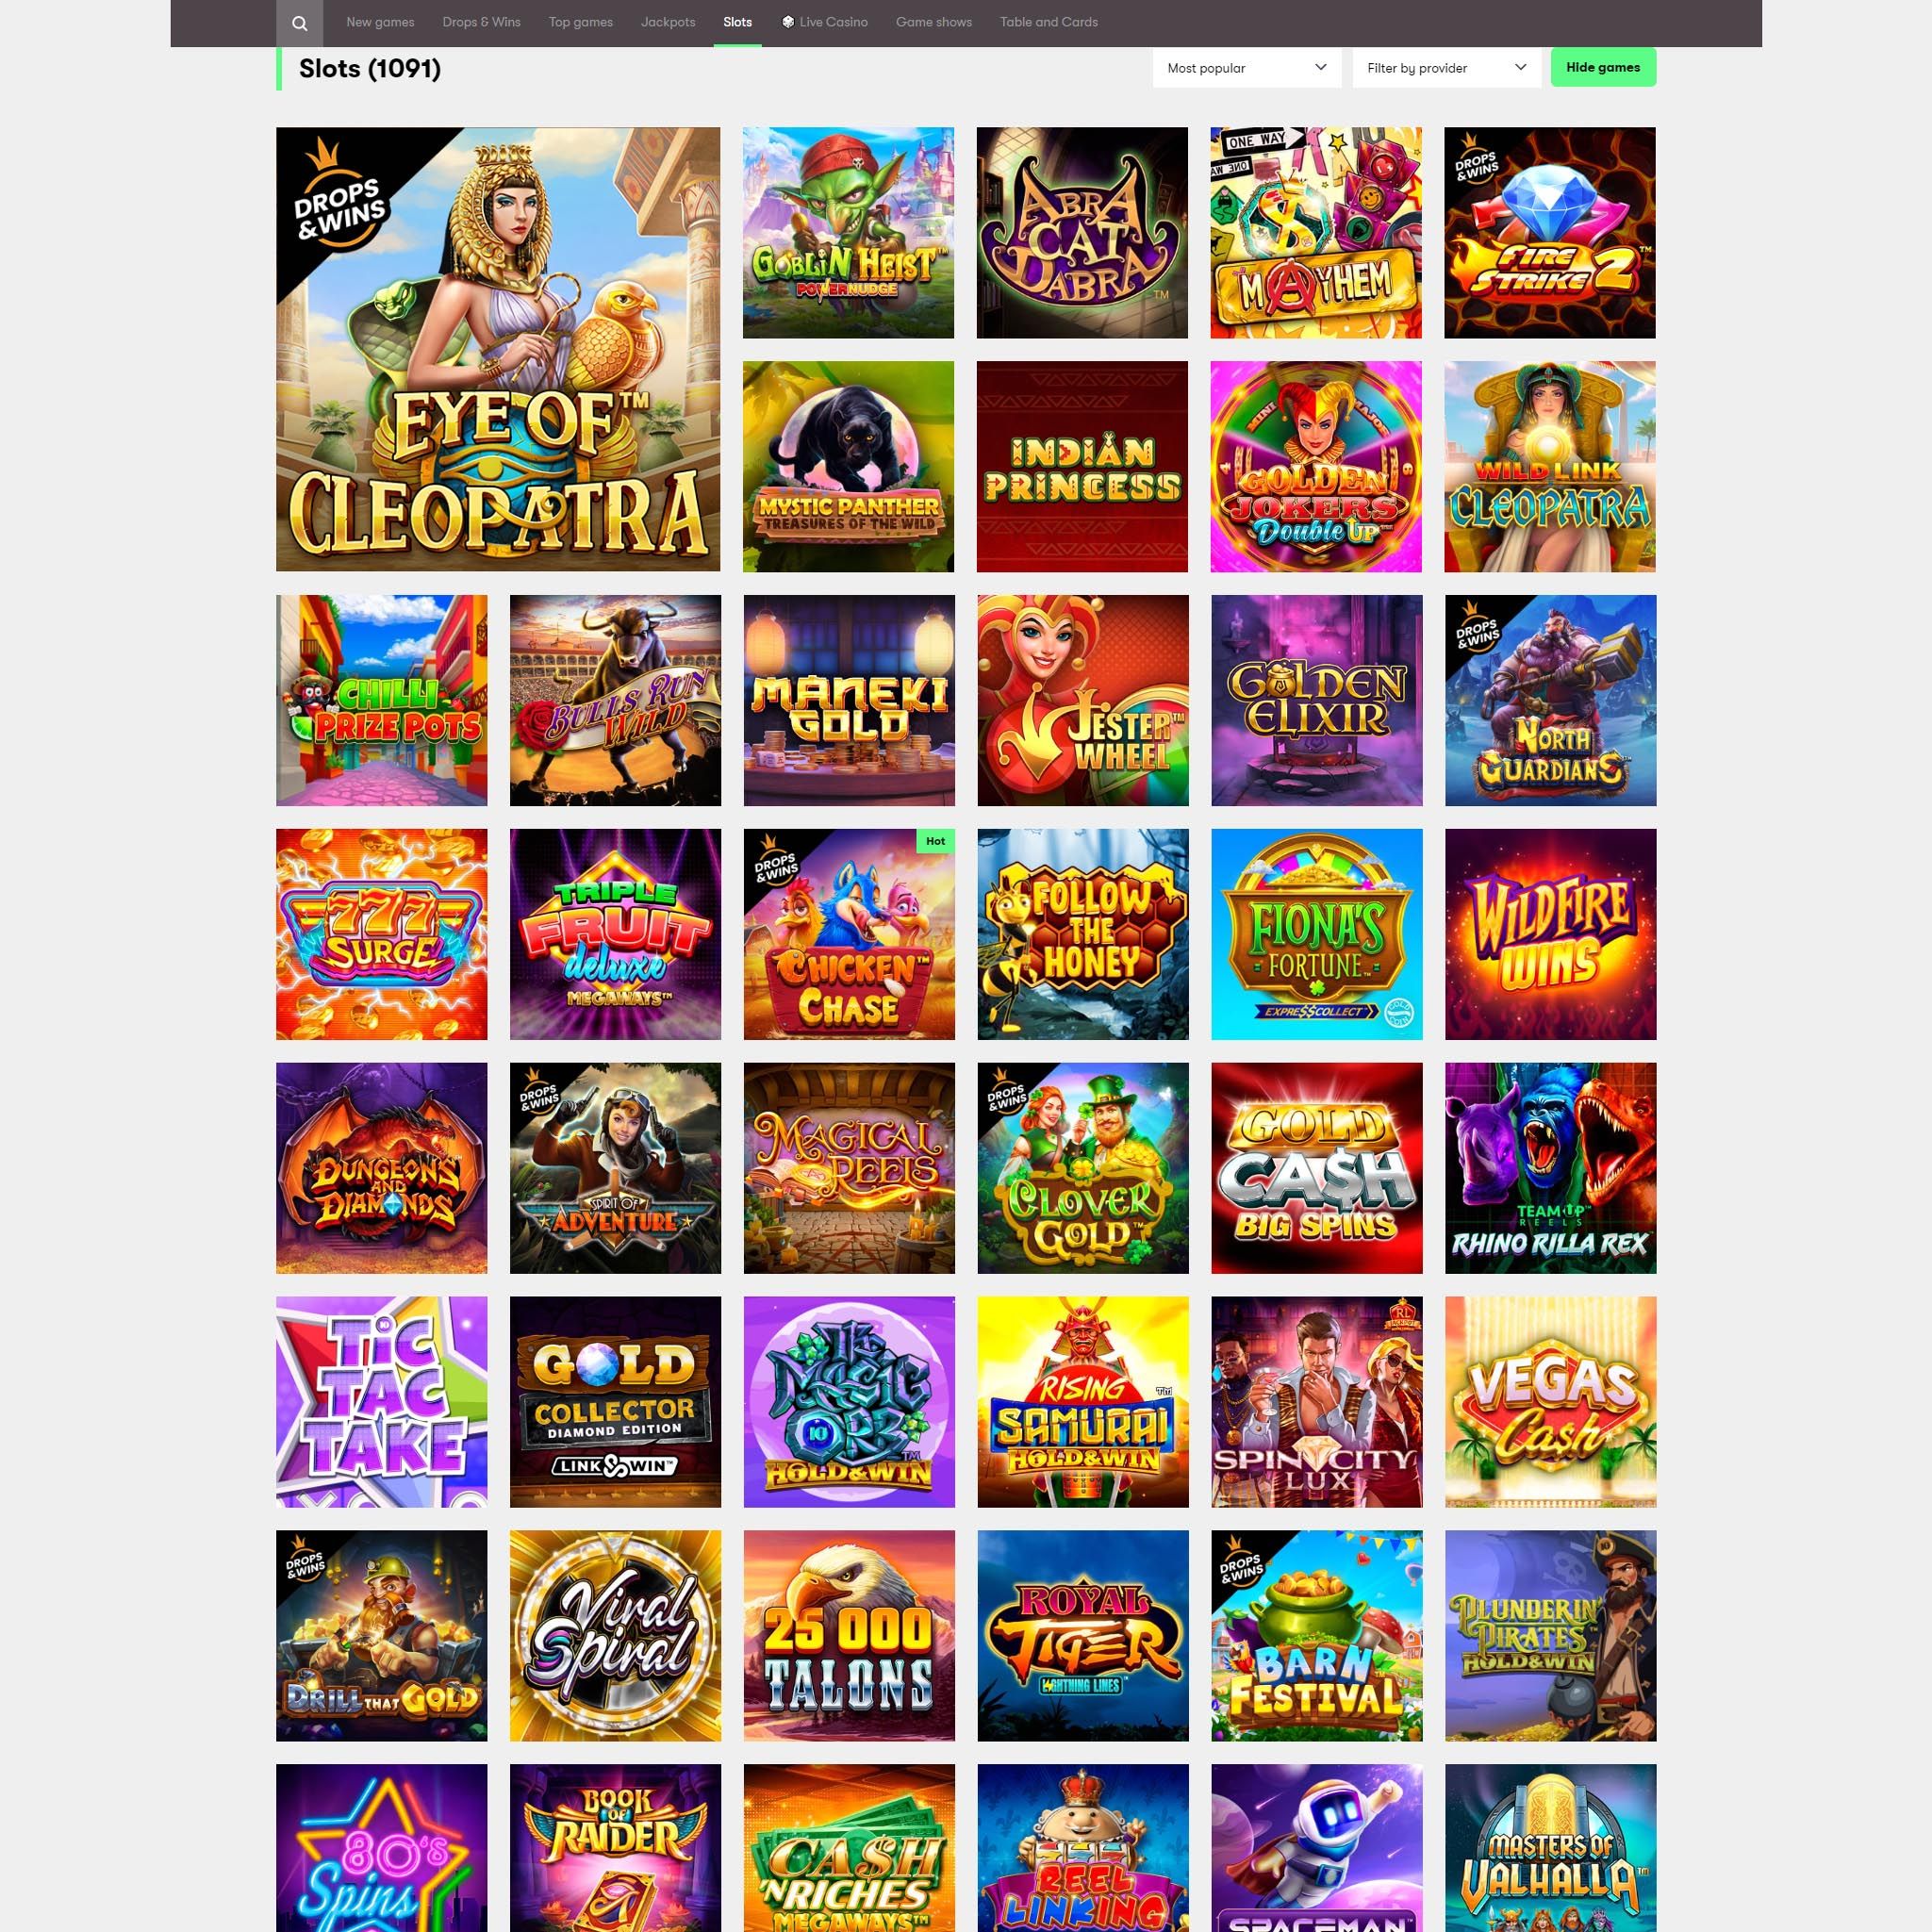 10bet Casino full games catalogue